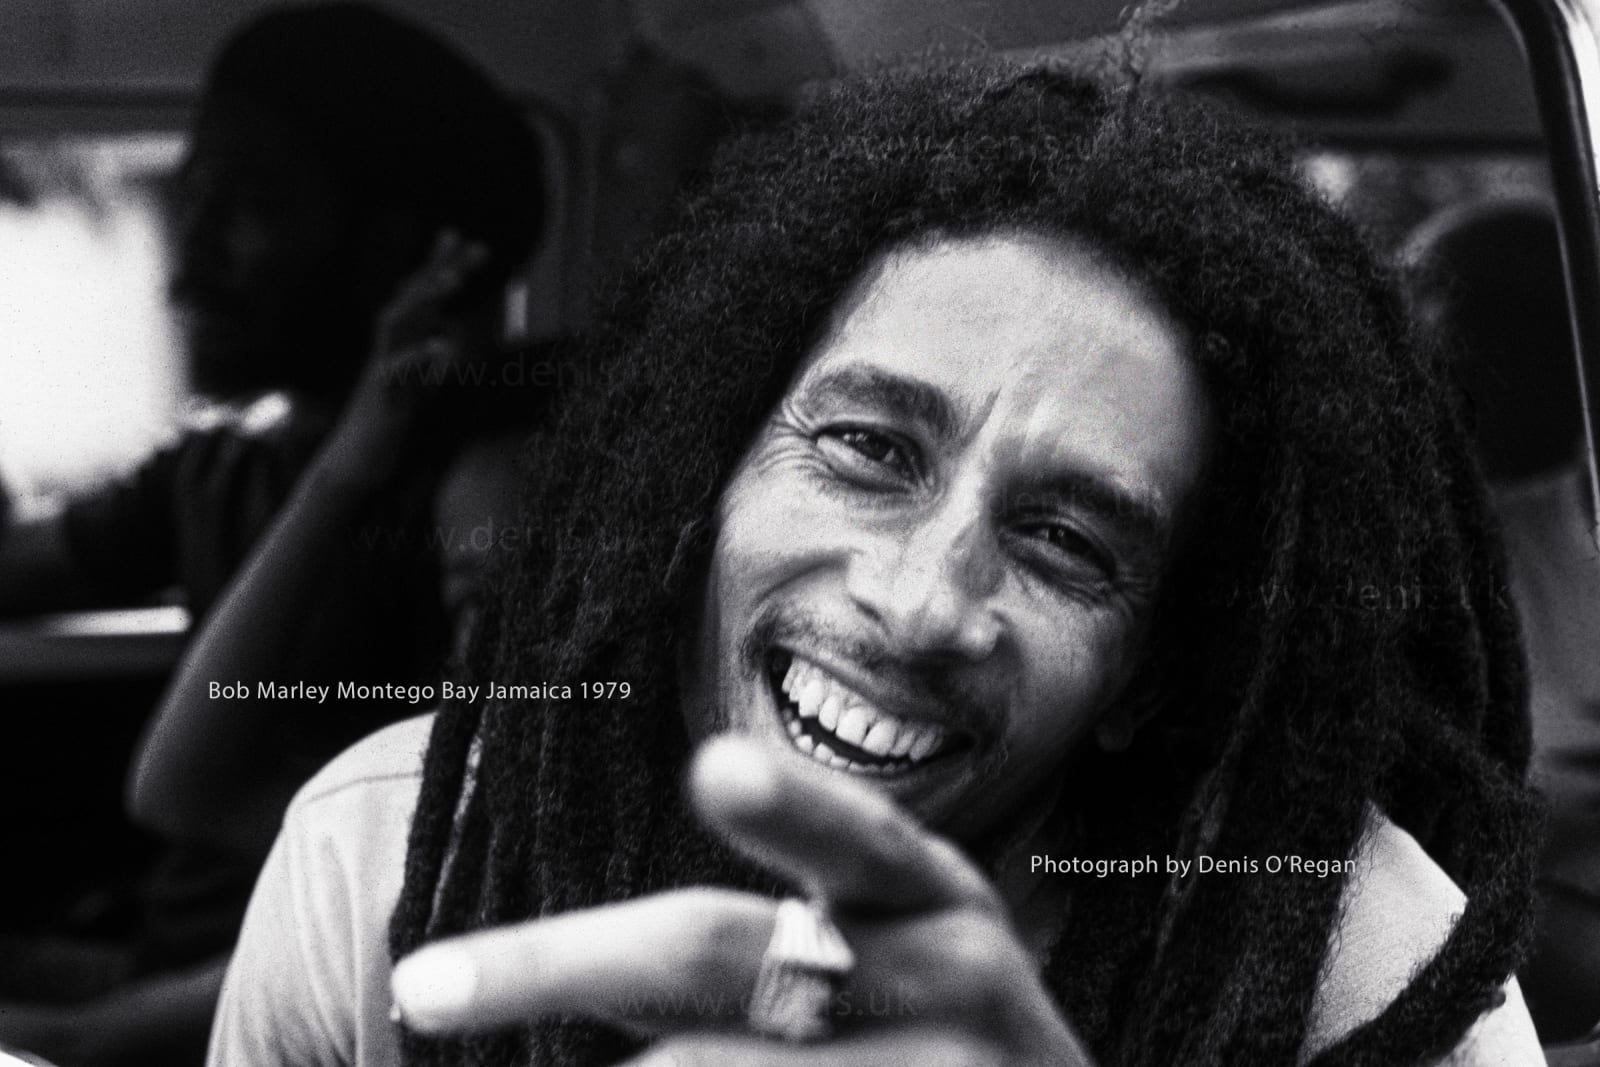 BOB MARLEY, Bob Marley in Jamaica, 1979